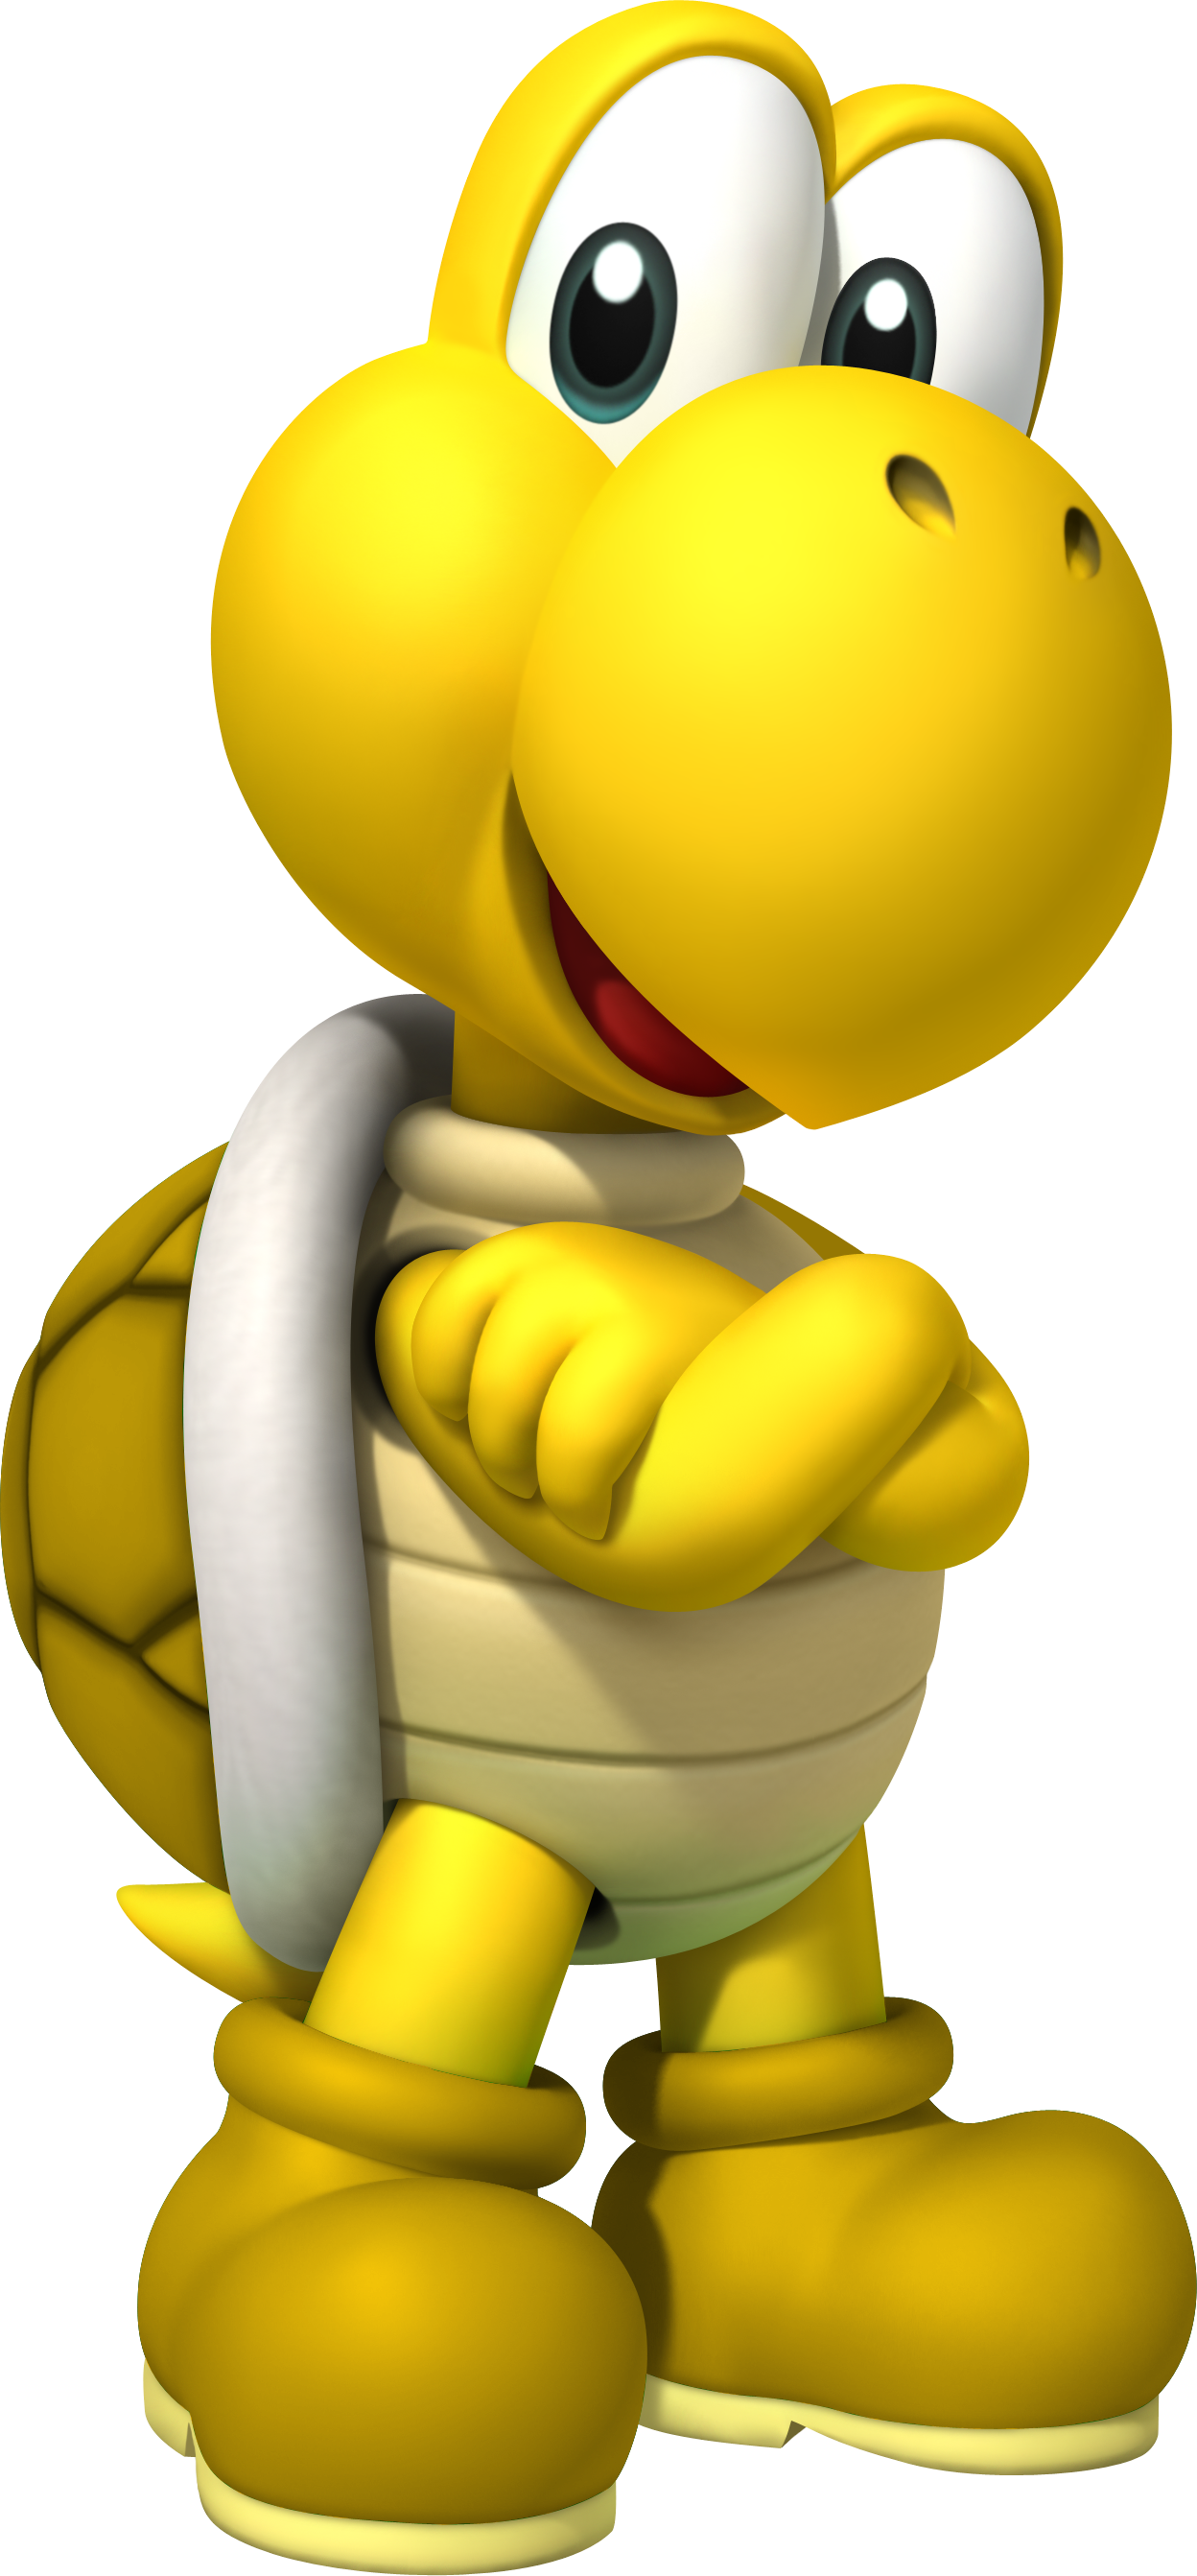 Image Acl Mk8 Yellow Koopa Troopapng Fantendo Nintendo Fanon Wiki Fandom Powered By Wikia 7806